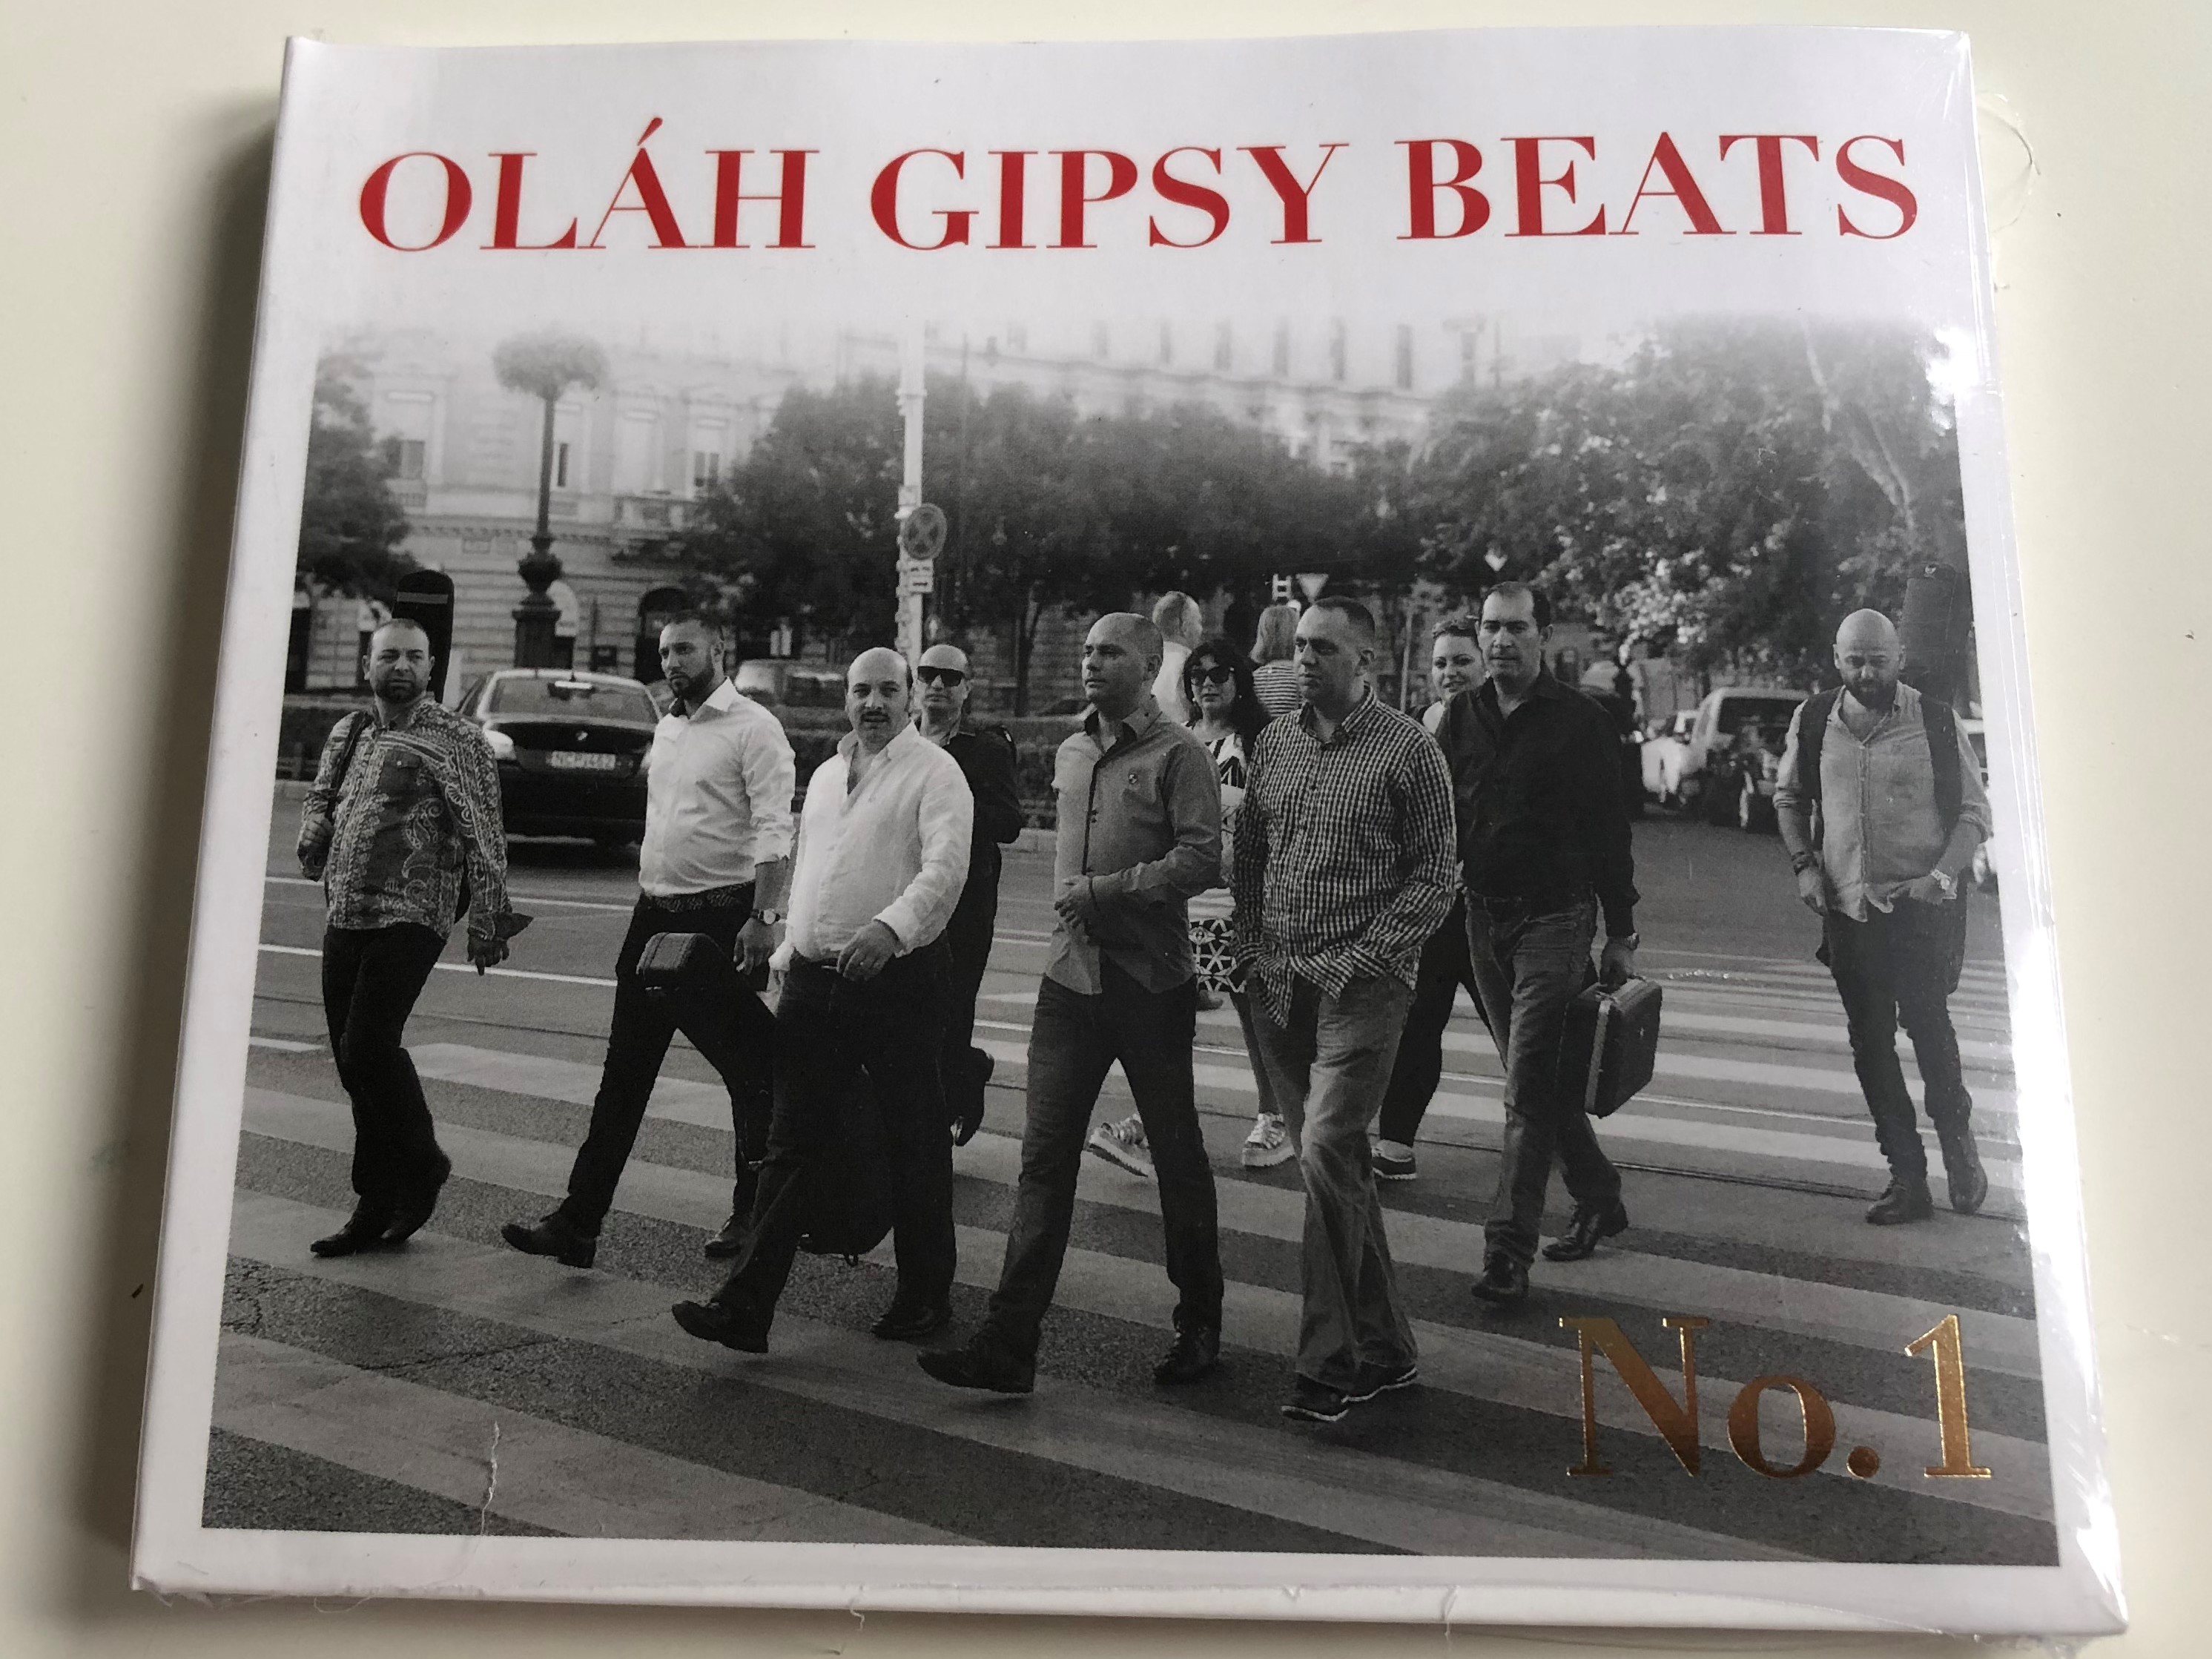 ol-h-gipsy-beats-no.-1-fon-budai-zeneh-z-audio-cd-2016-fa-388-2-1-.jpg